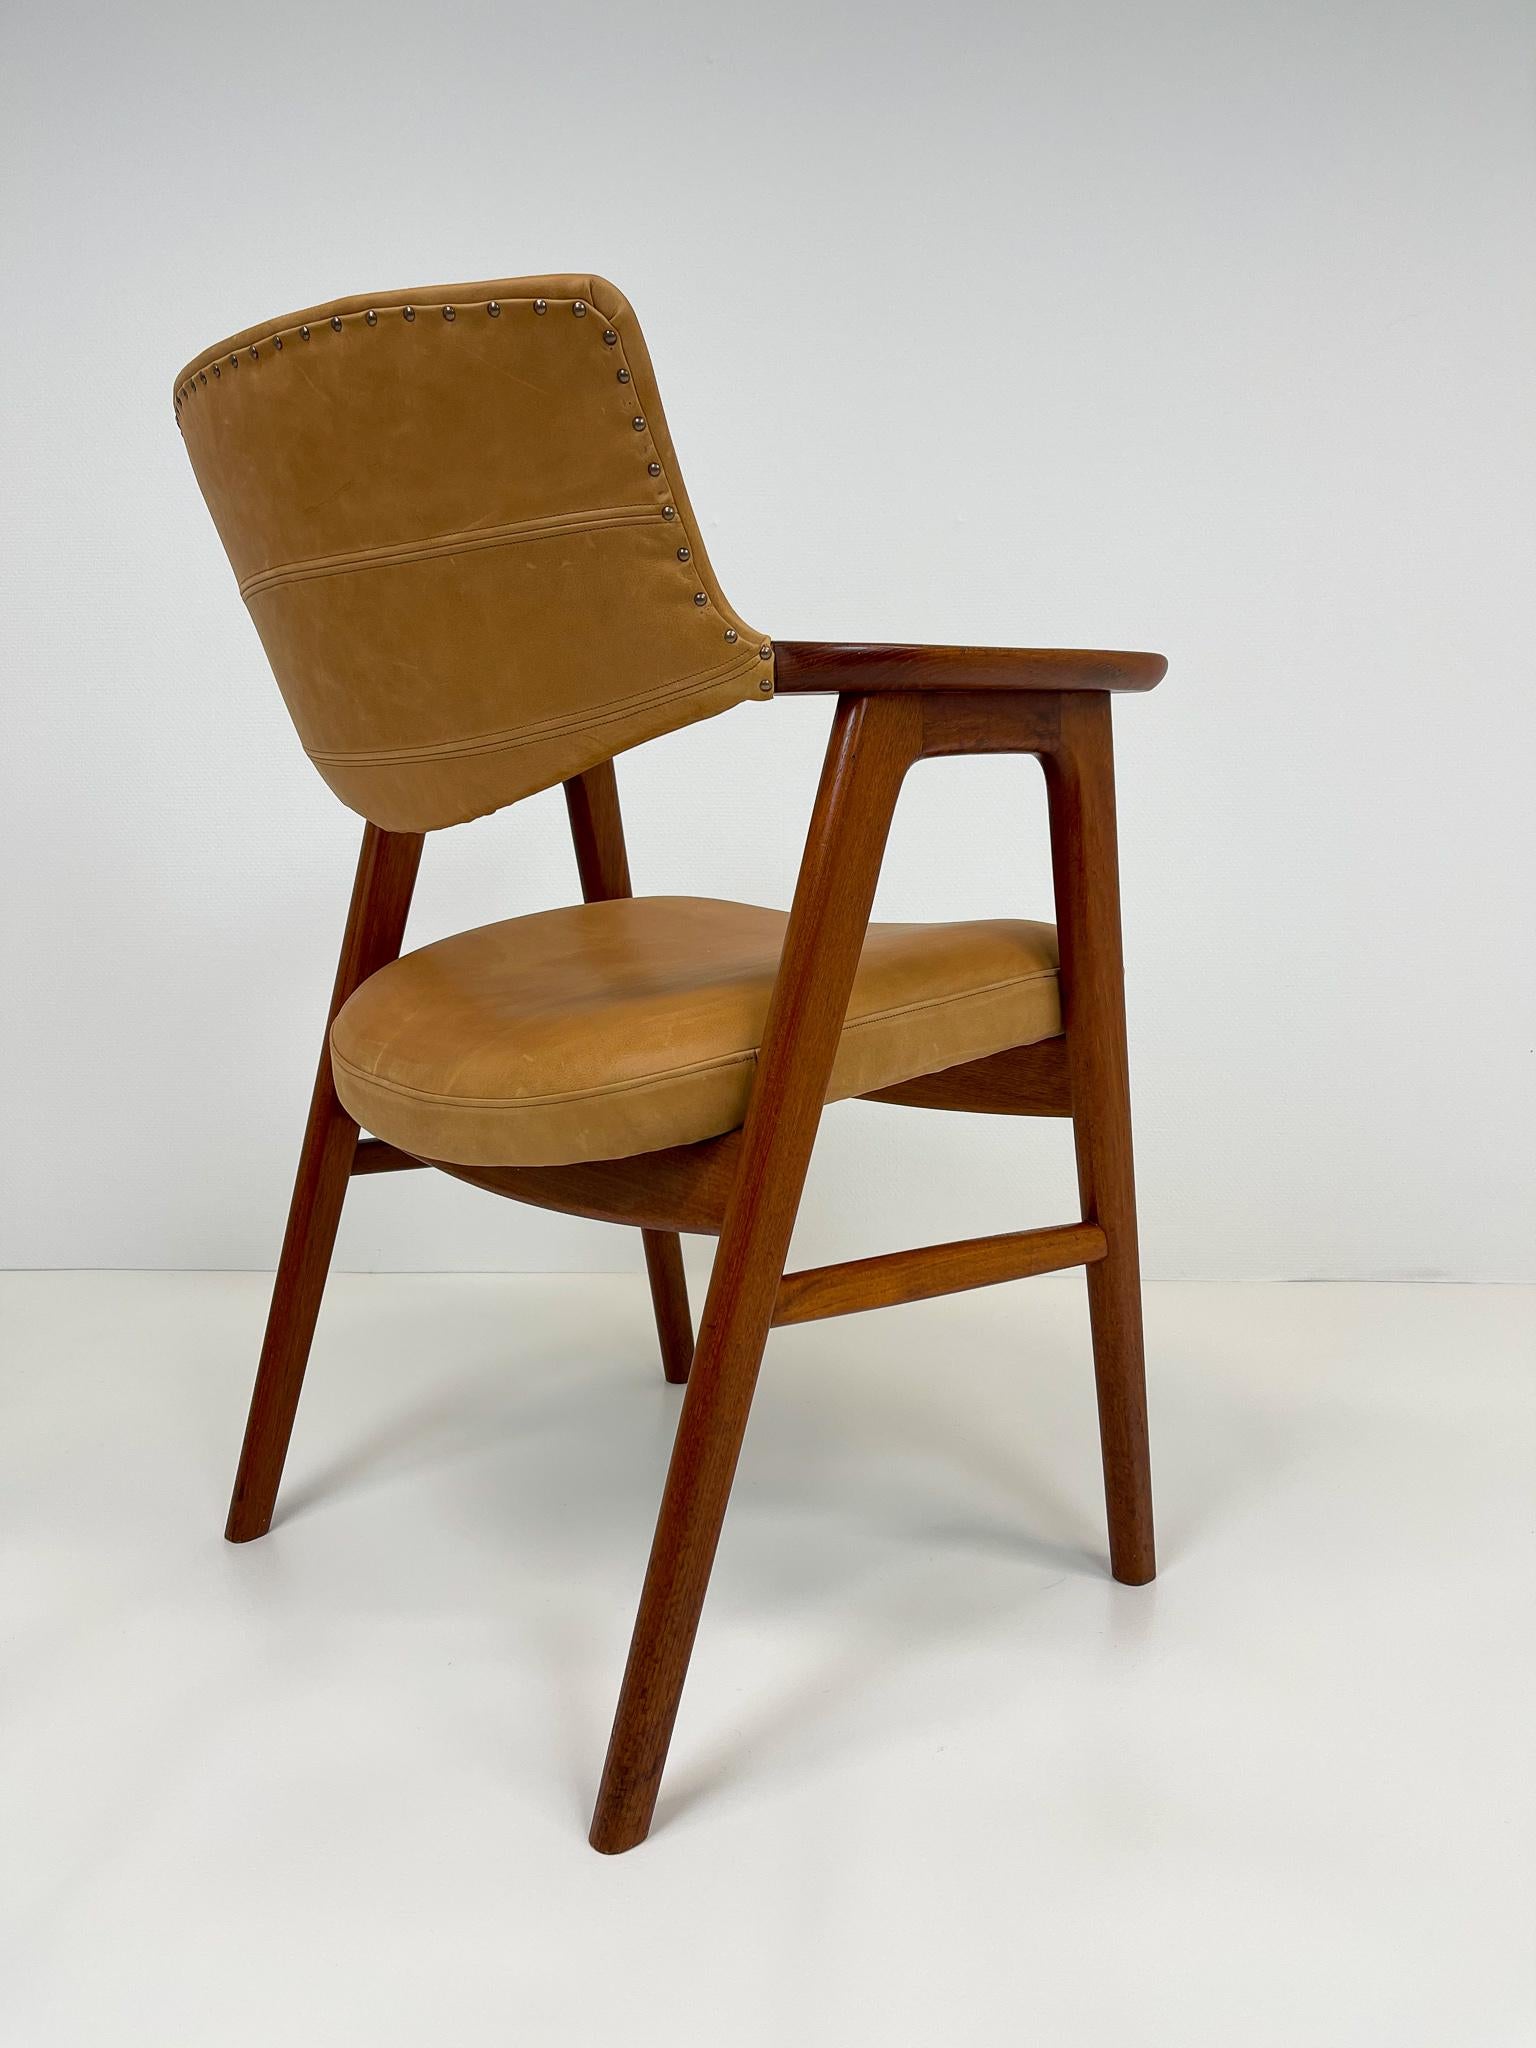 Midcentury Erik Kirkegaard Danish Teak and Leather Desk Chair, 1960s For Sale 5